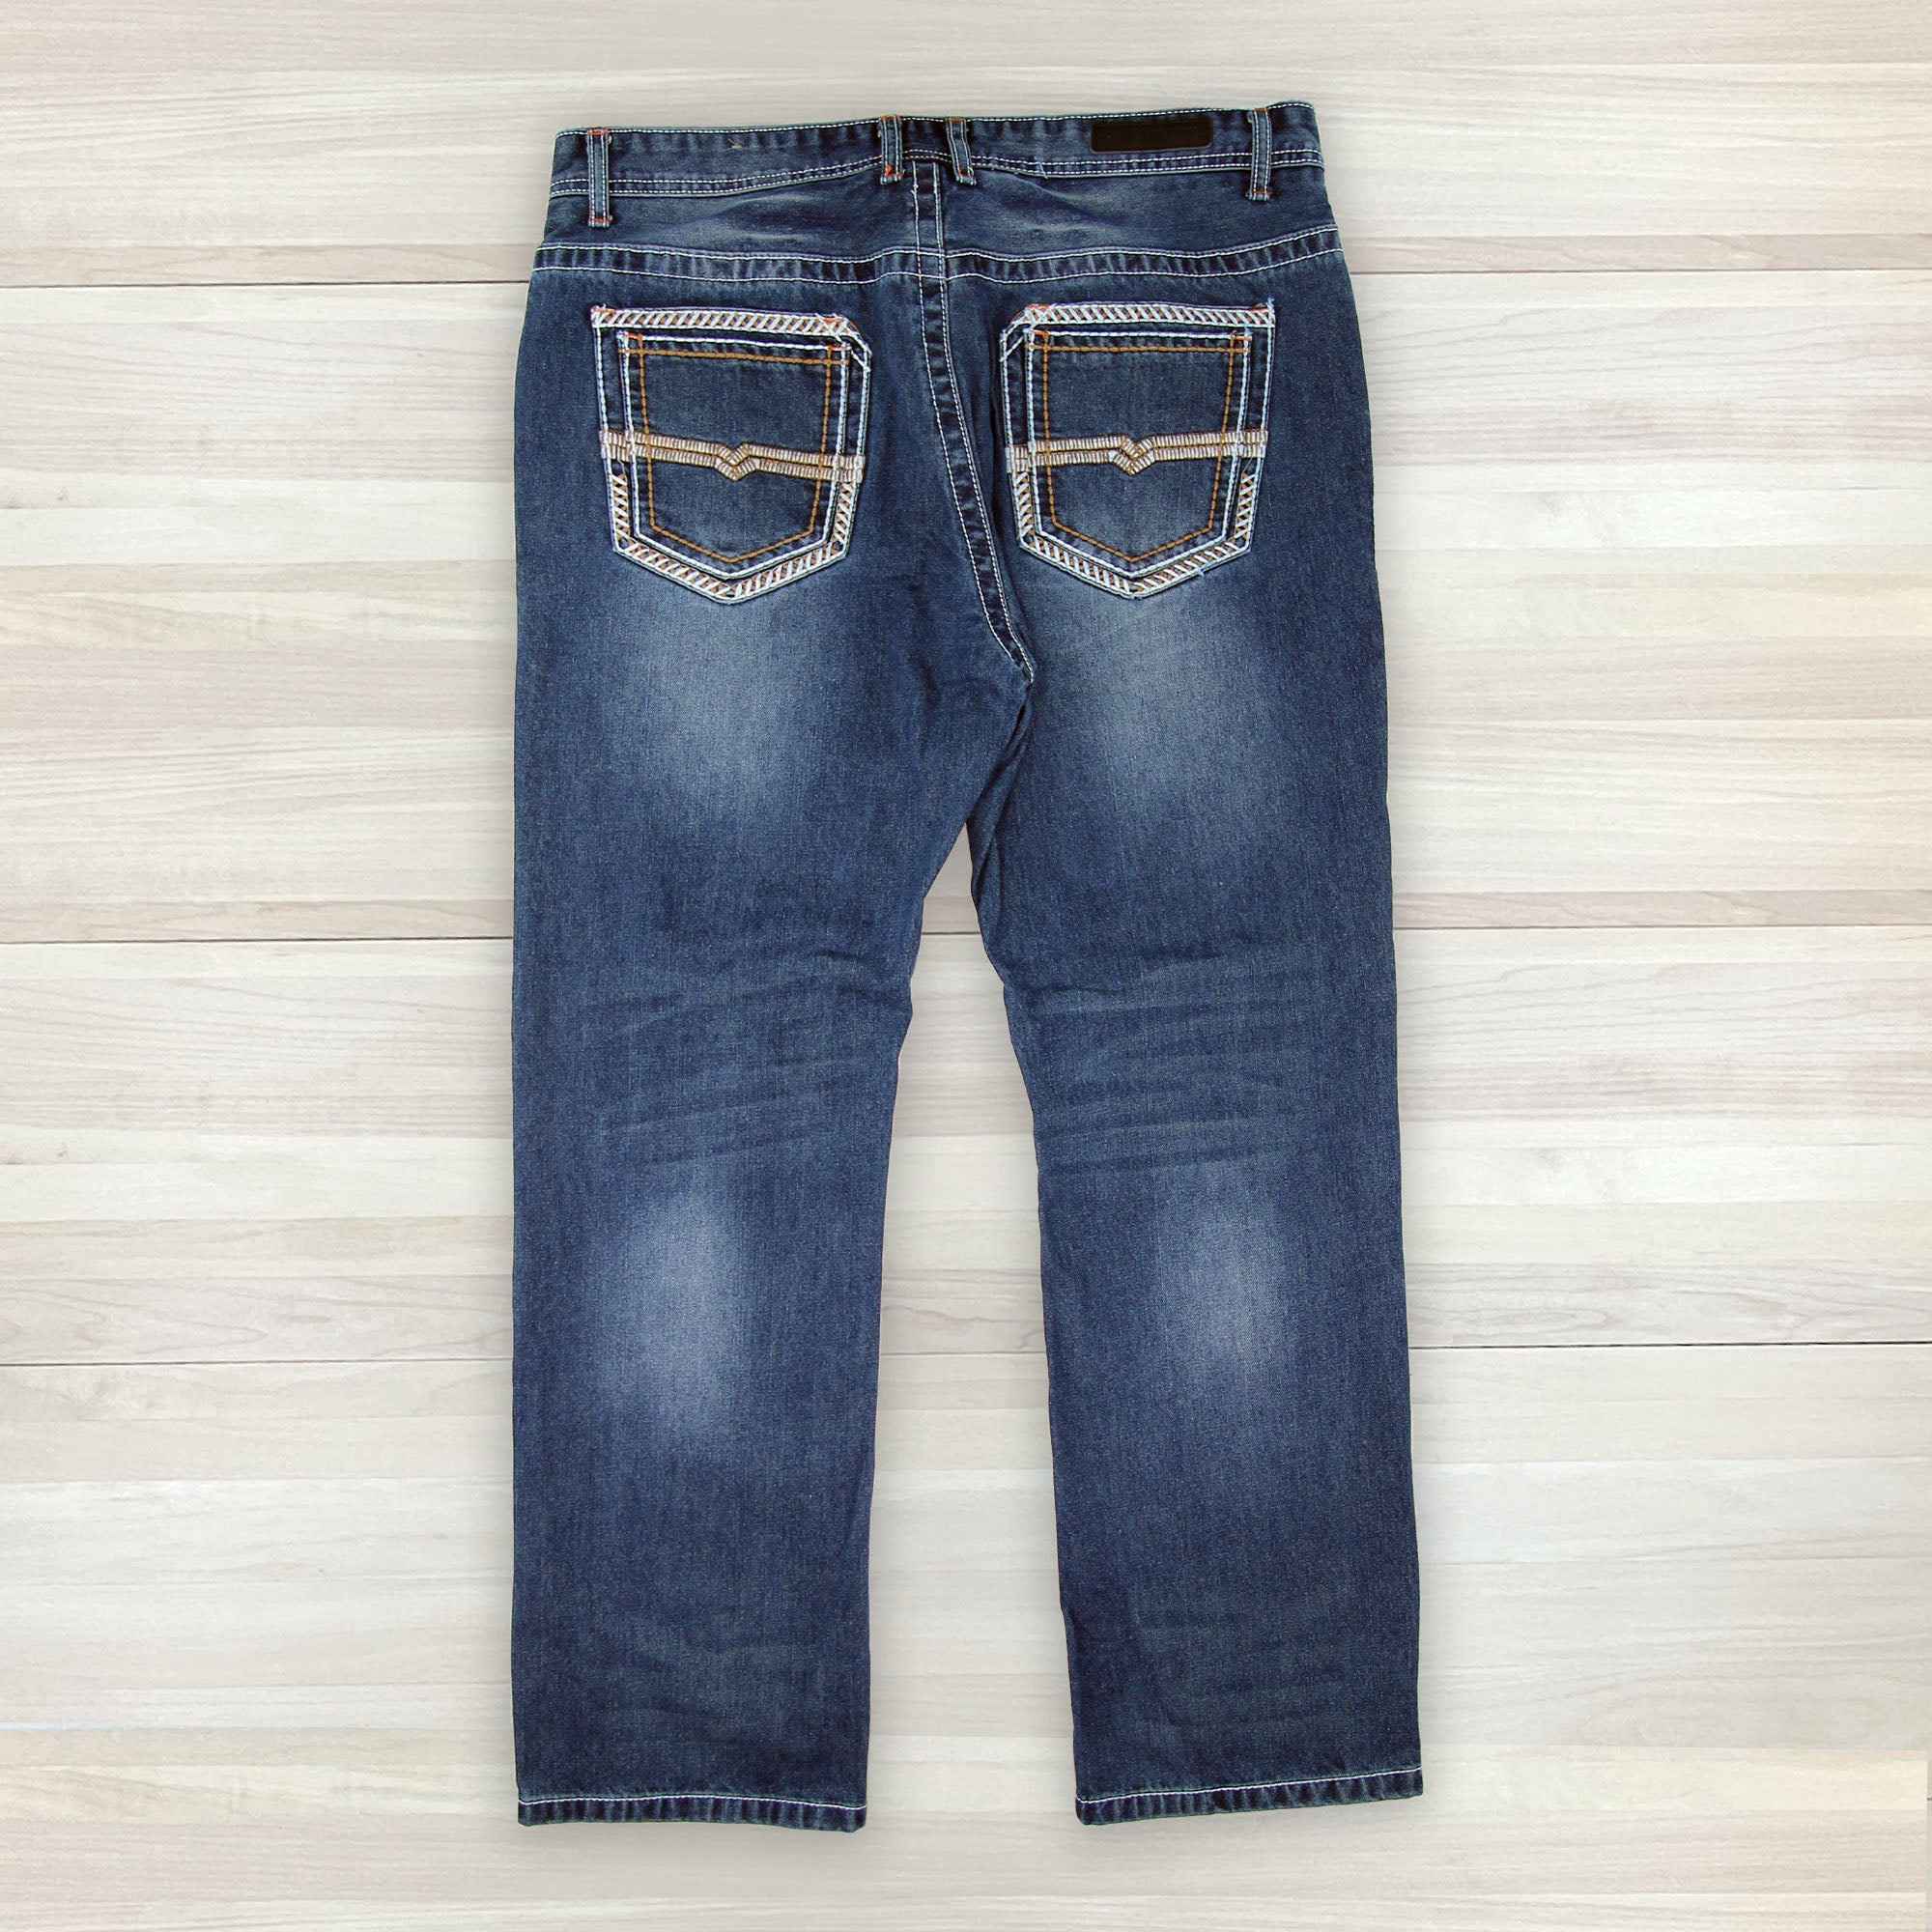 Men's CJ Black Relax Straight Distressed Blue Jeans - Measures 38x31 - 0